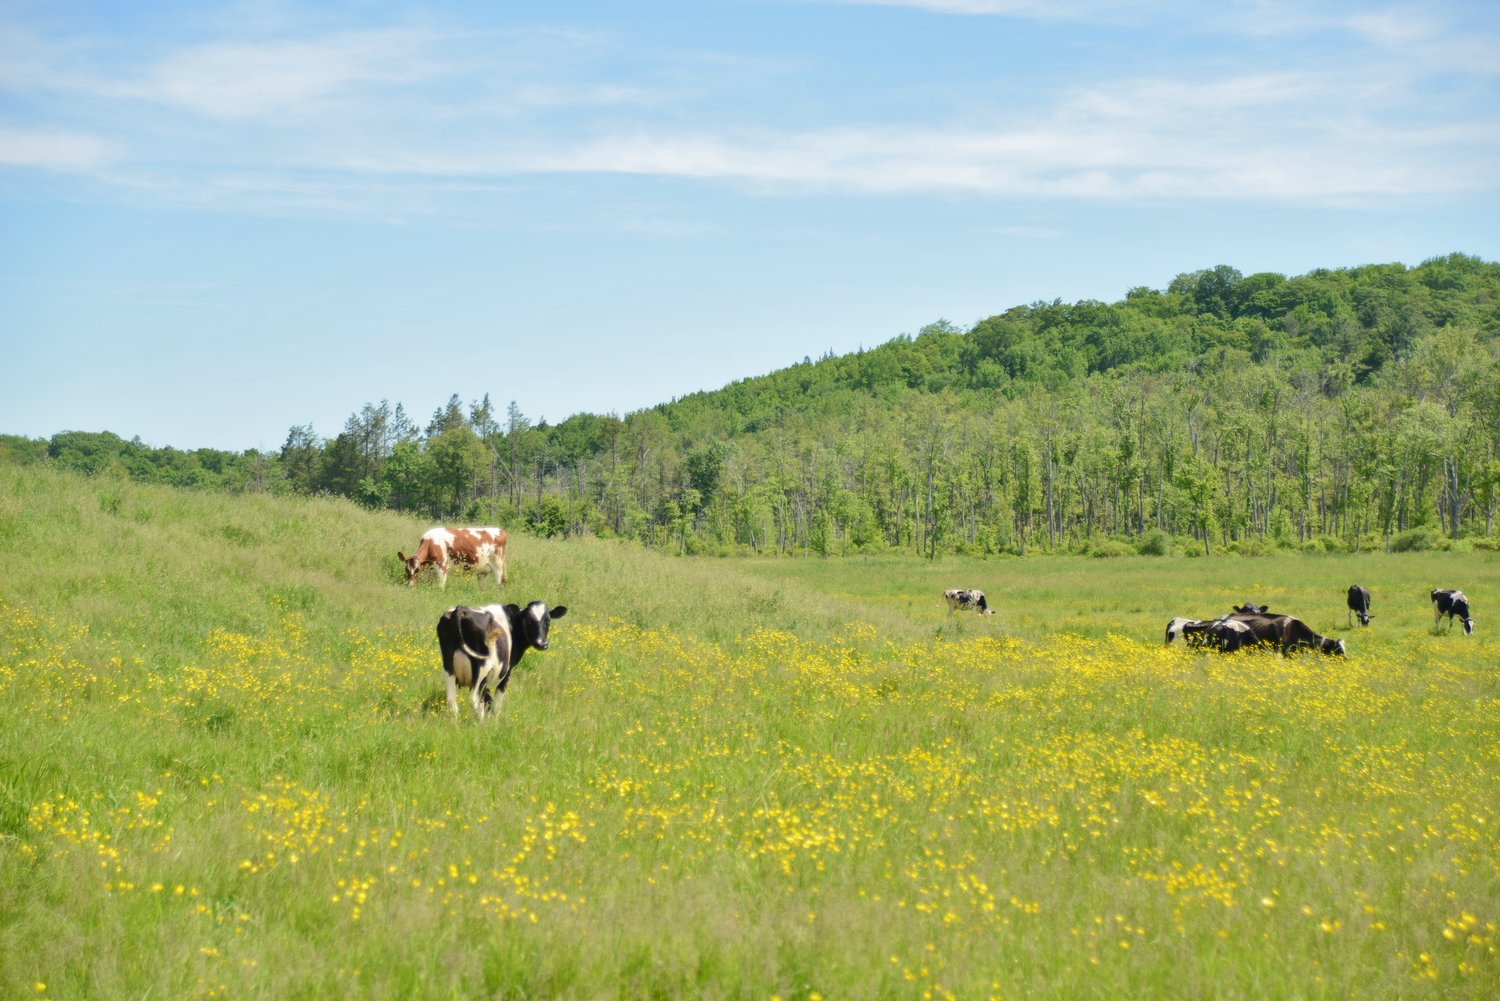 Cows grazing on a farm in Waymart, PA.